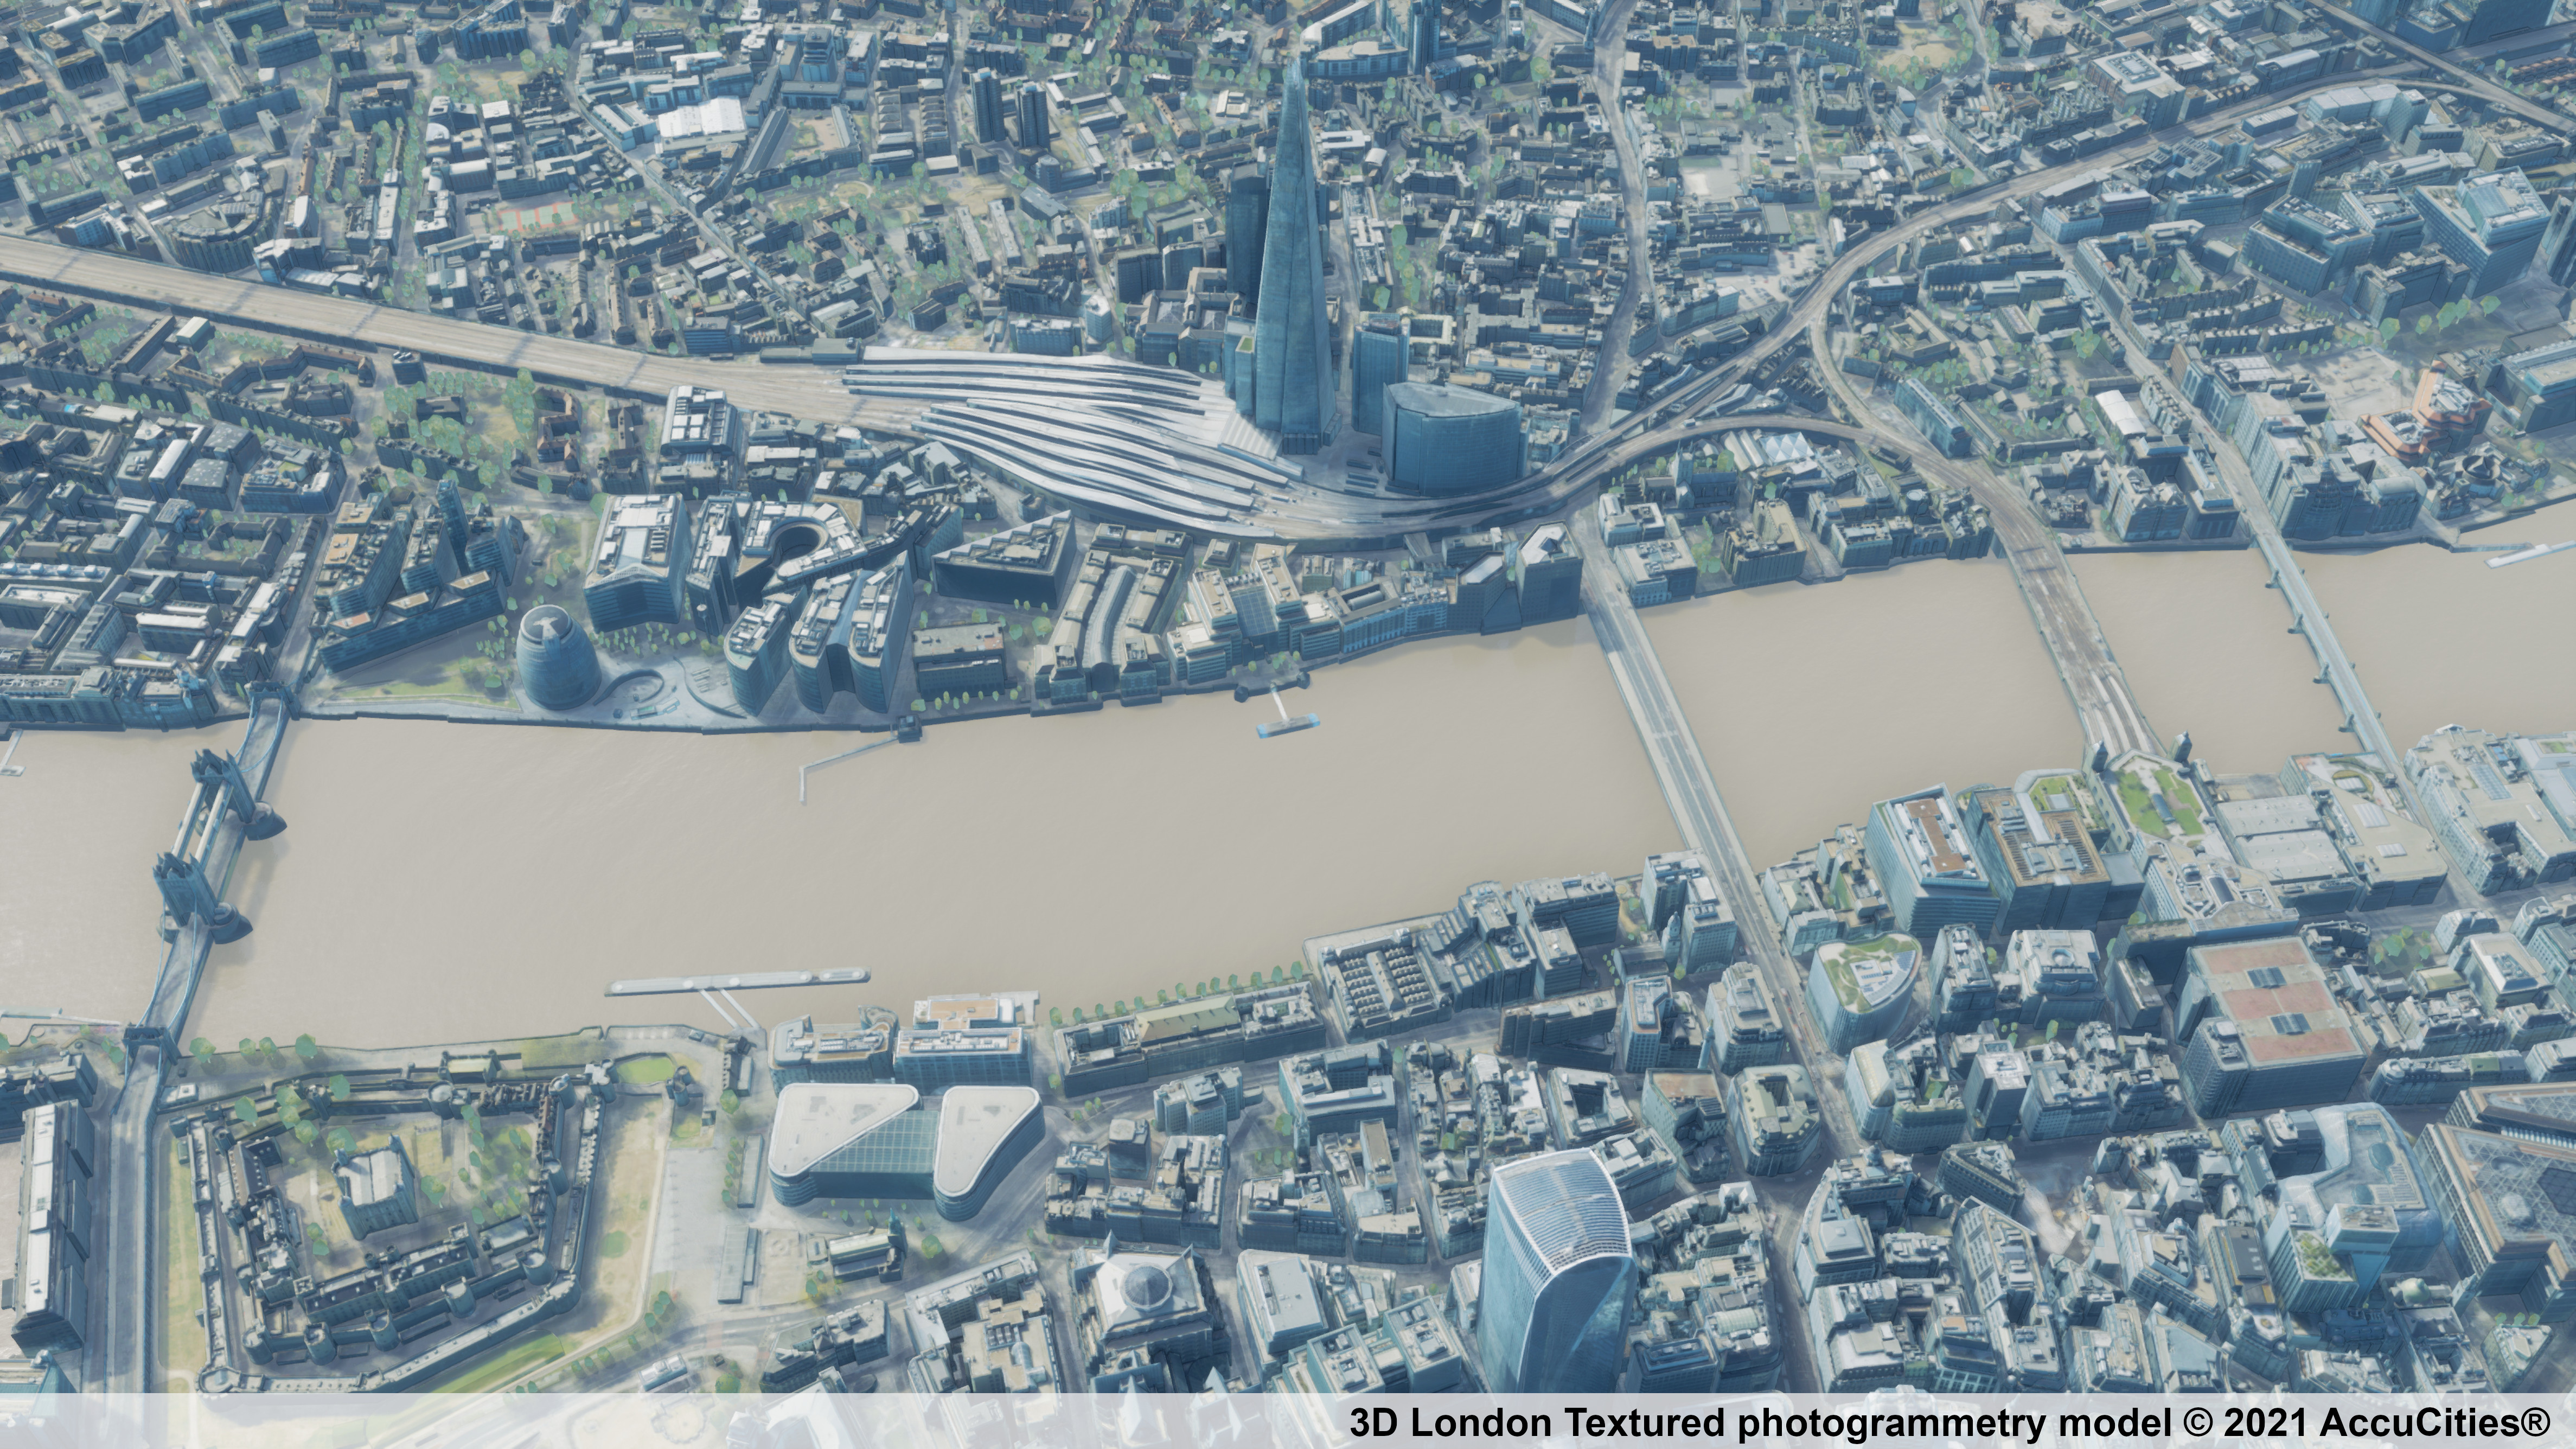 Textured photogrammetry city models comparisons 01.jpg